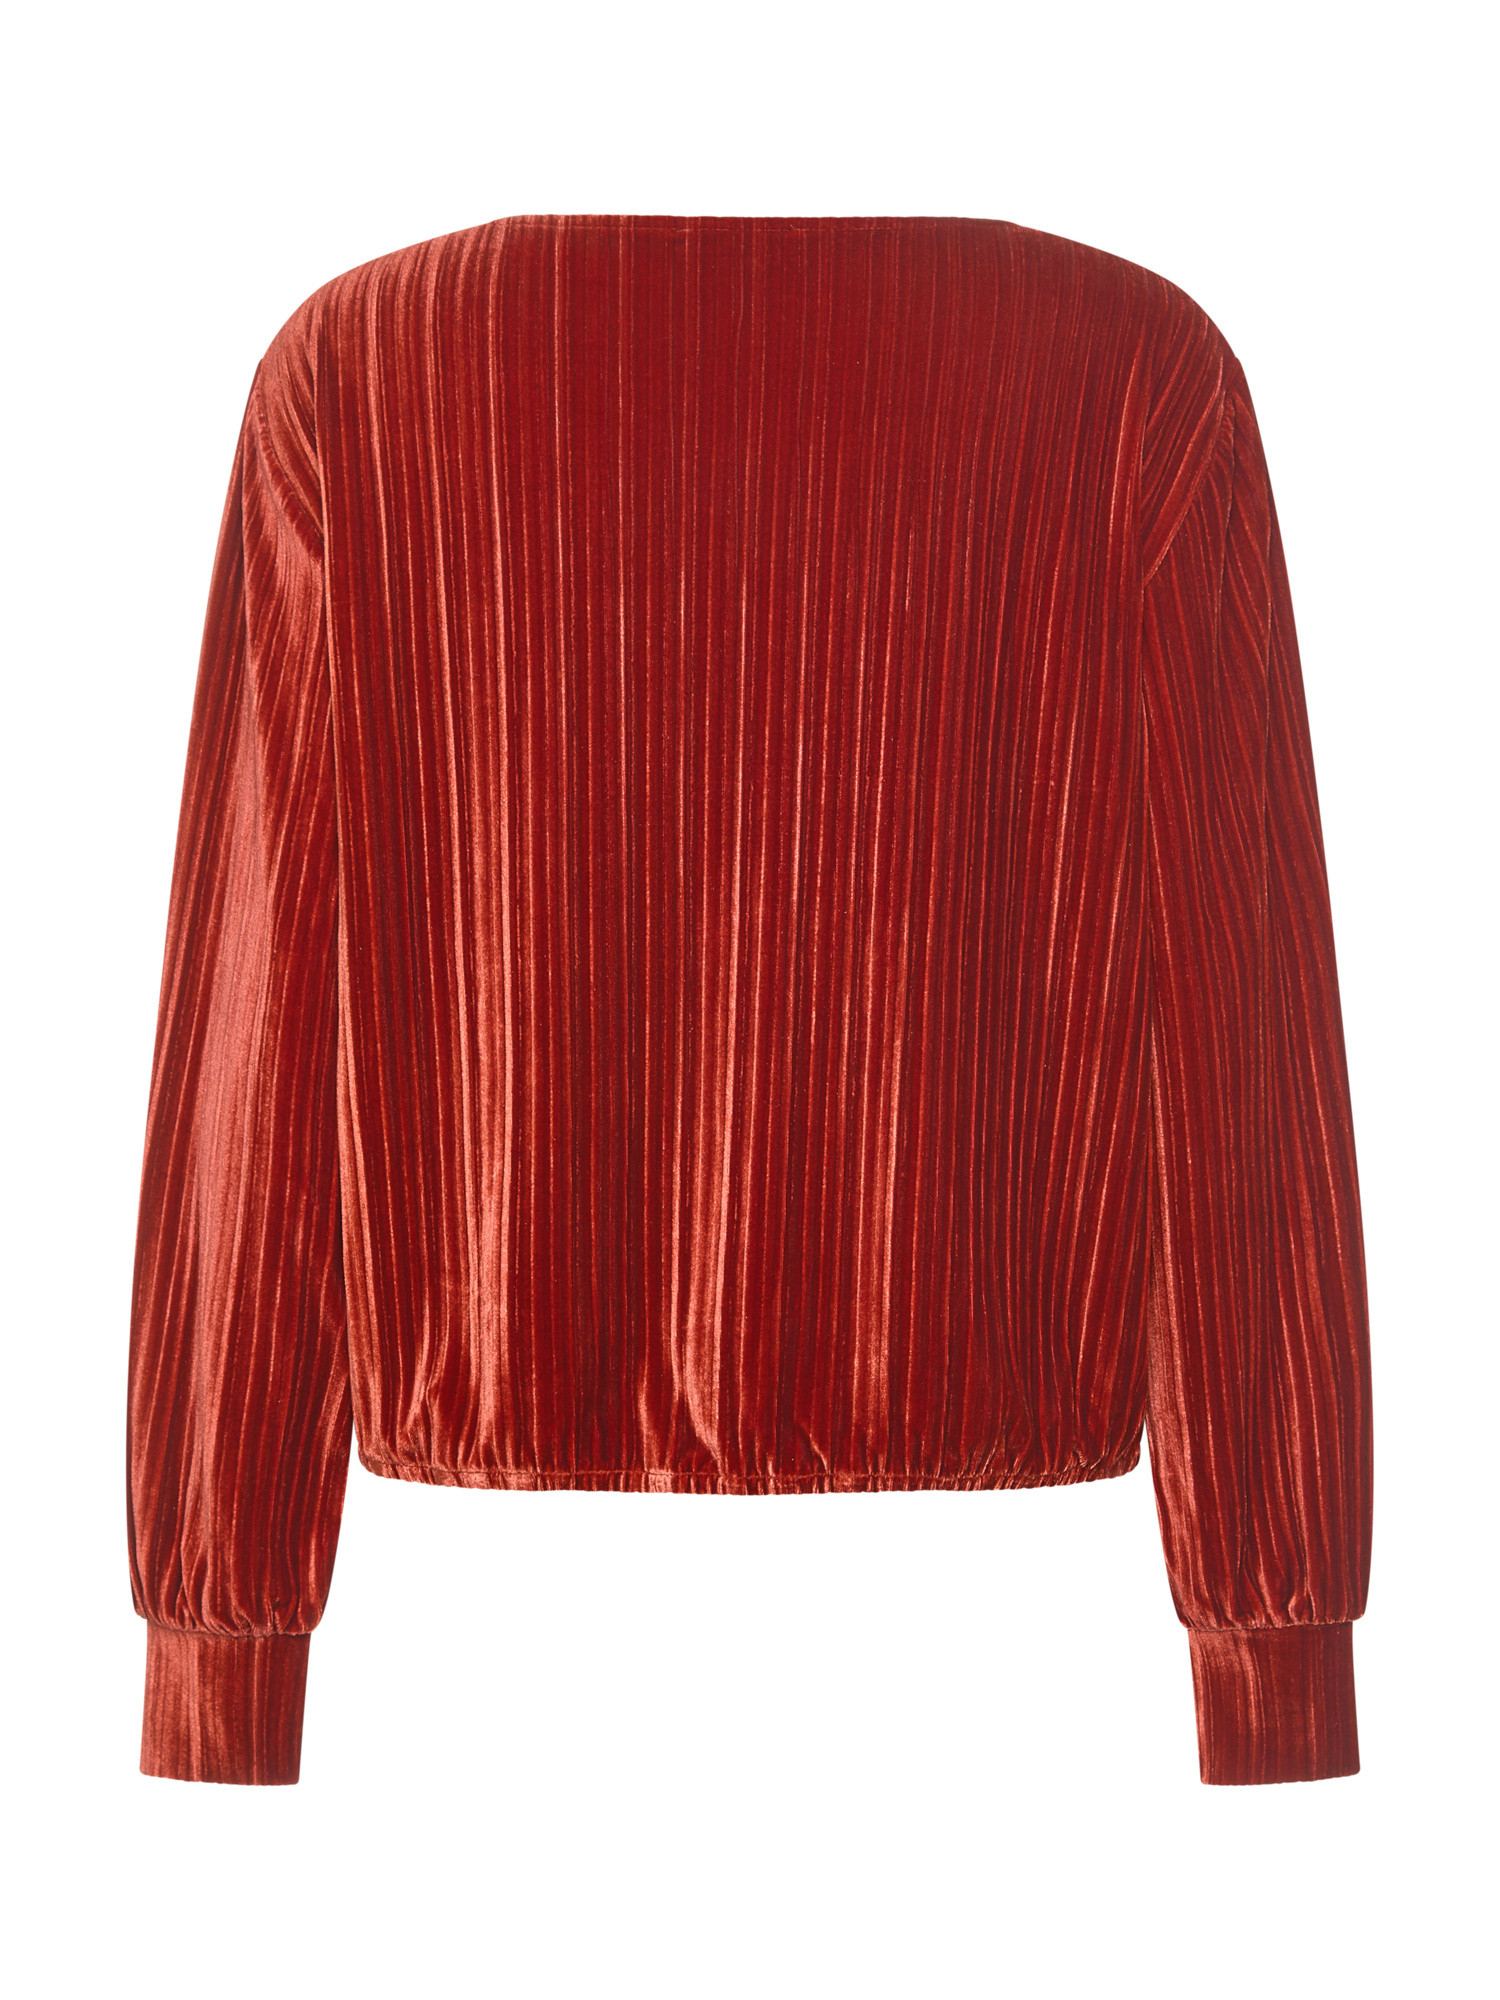 Koan - Pleated effect velvet sweater, Rope, large image number 1